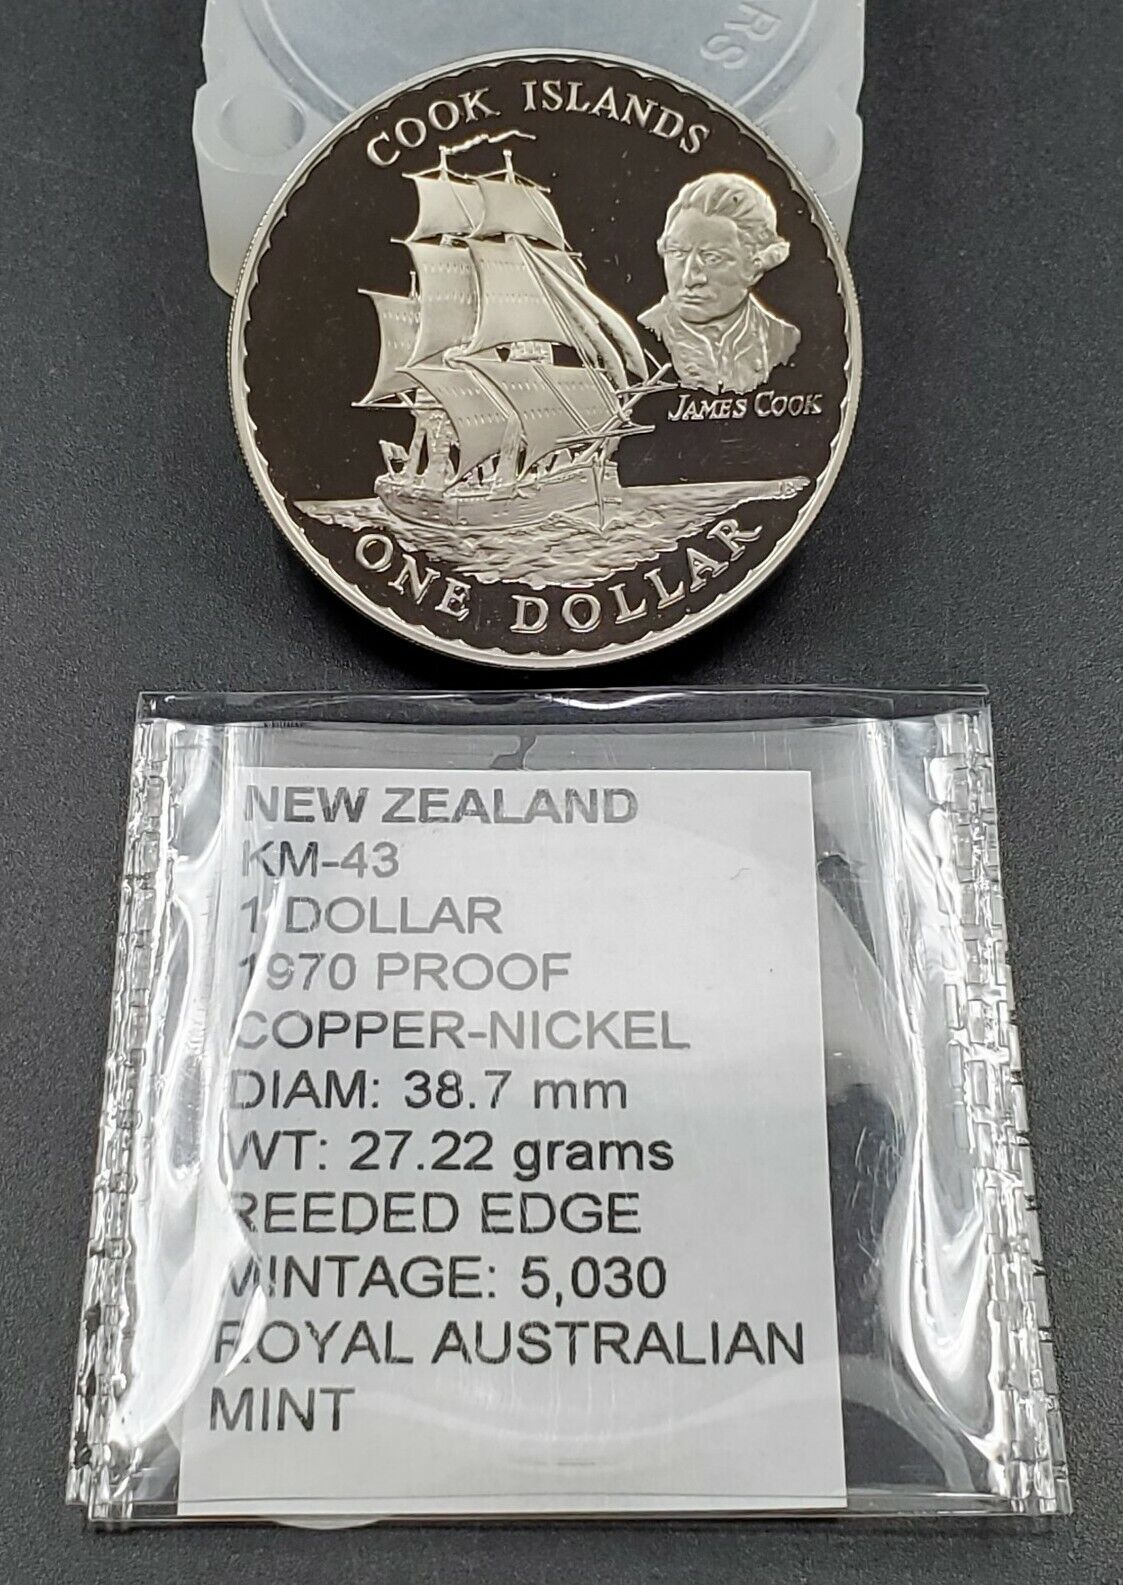 New Zealand Cook Island $1 Dollar 1970 Captain James Cook Crown Gem Proof